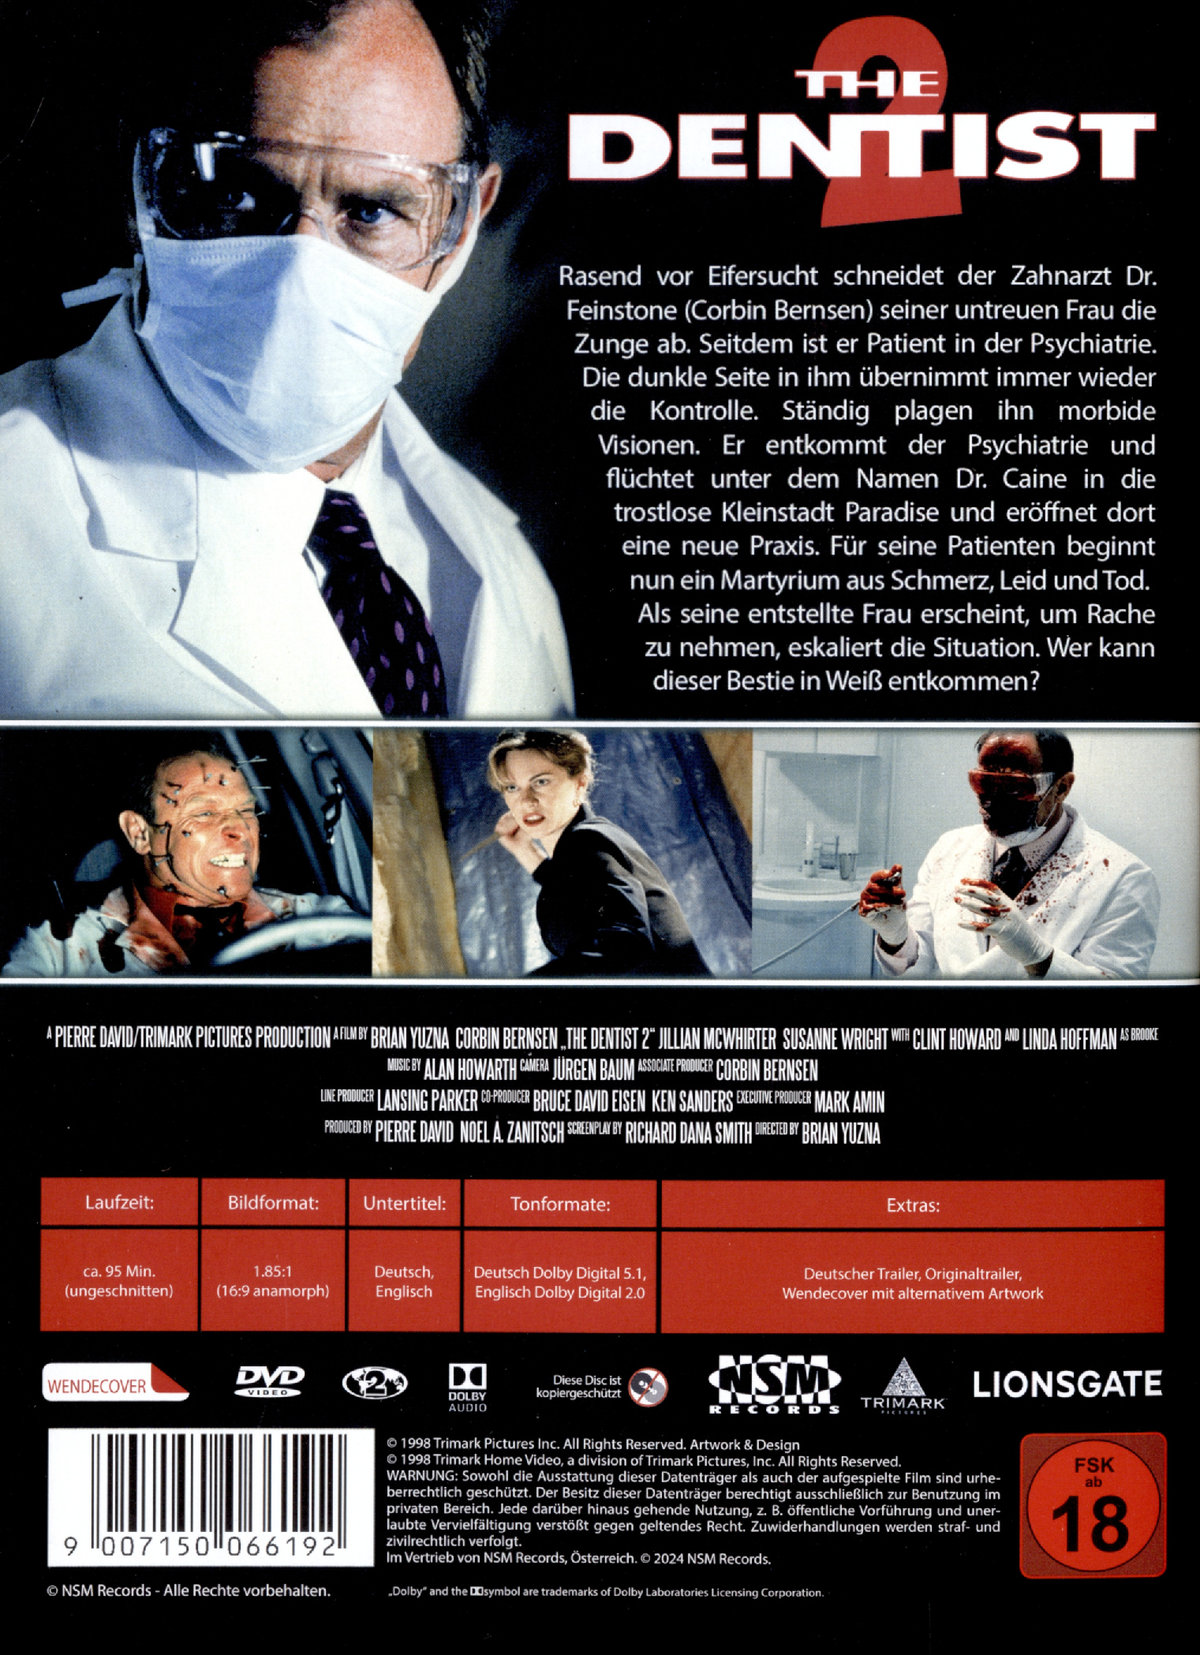 The Dentist 2 (uncut)  (DVD)